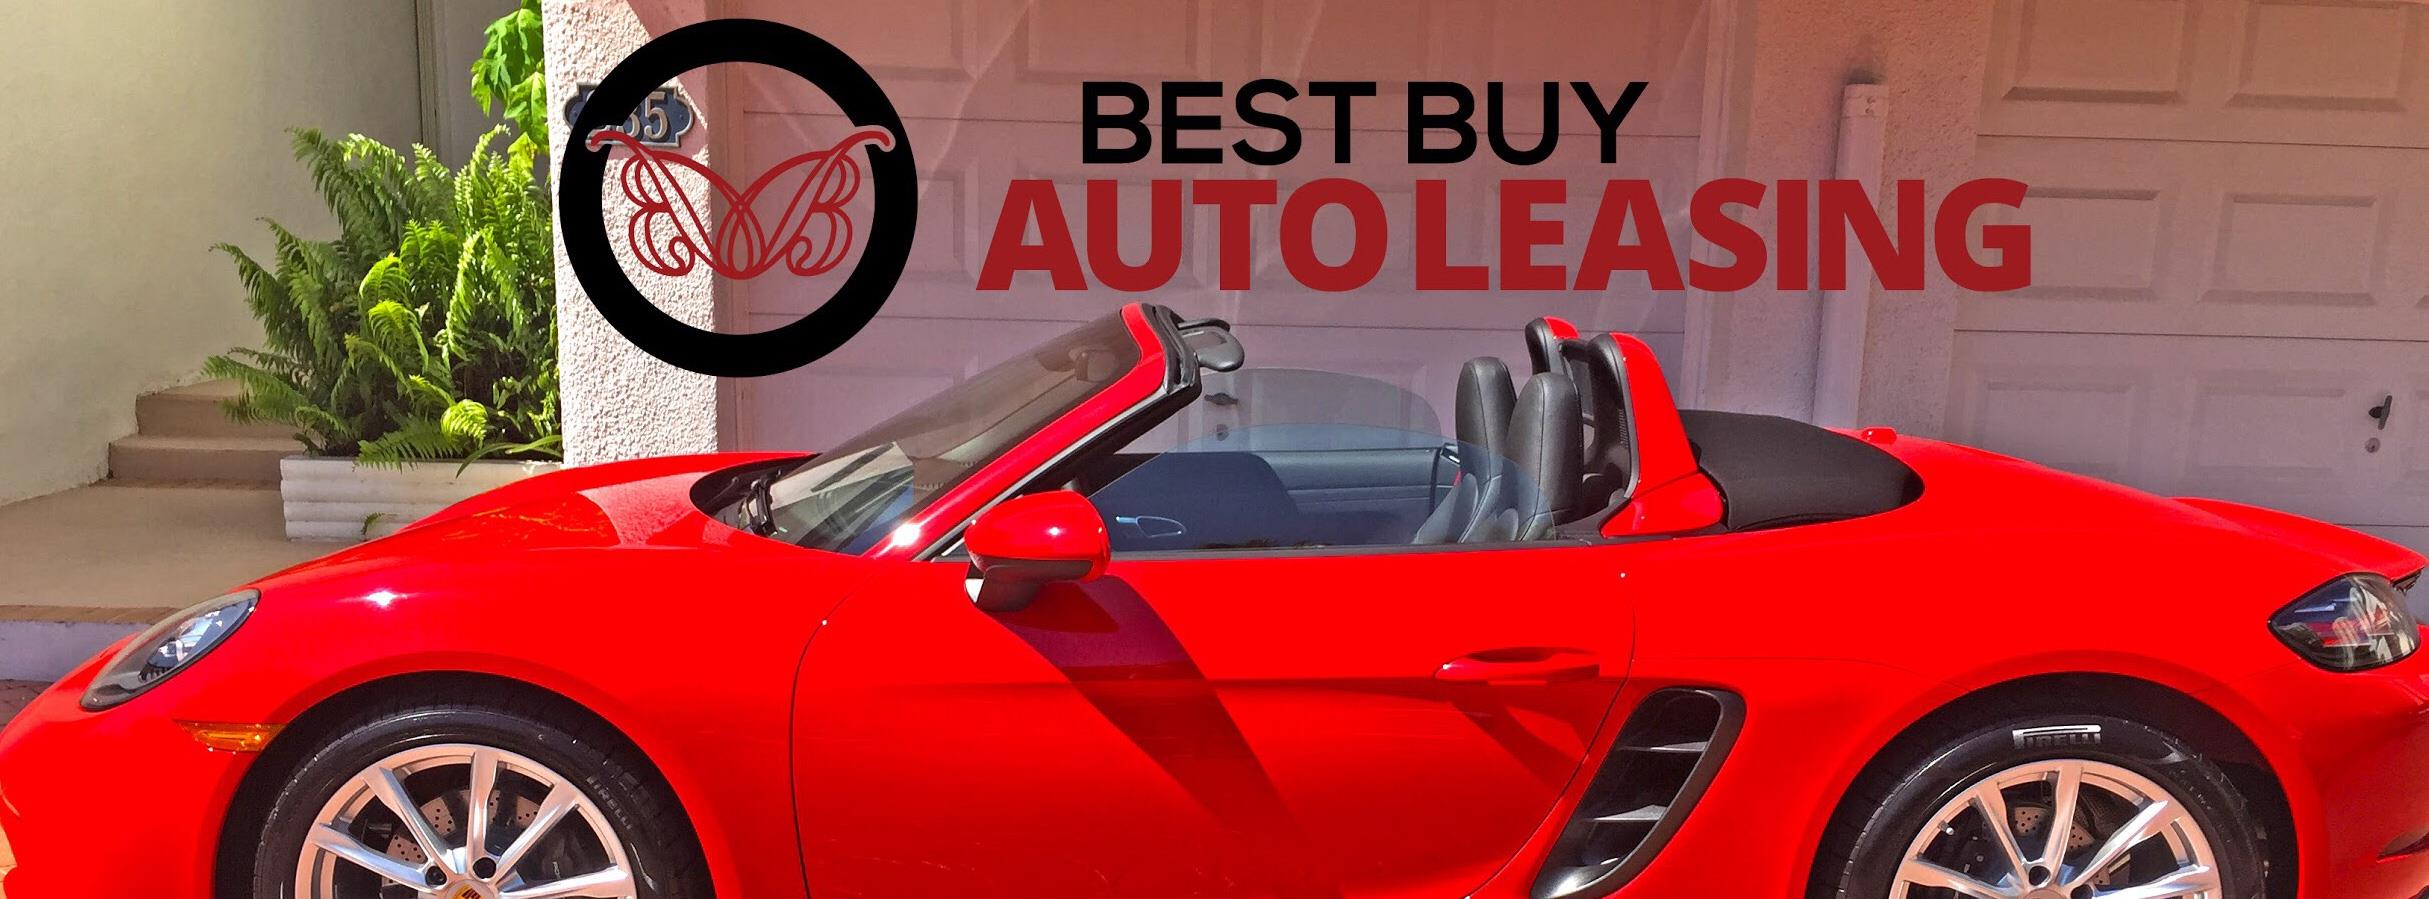 Best Buy Auto Leasing